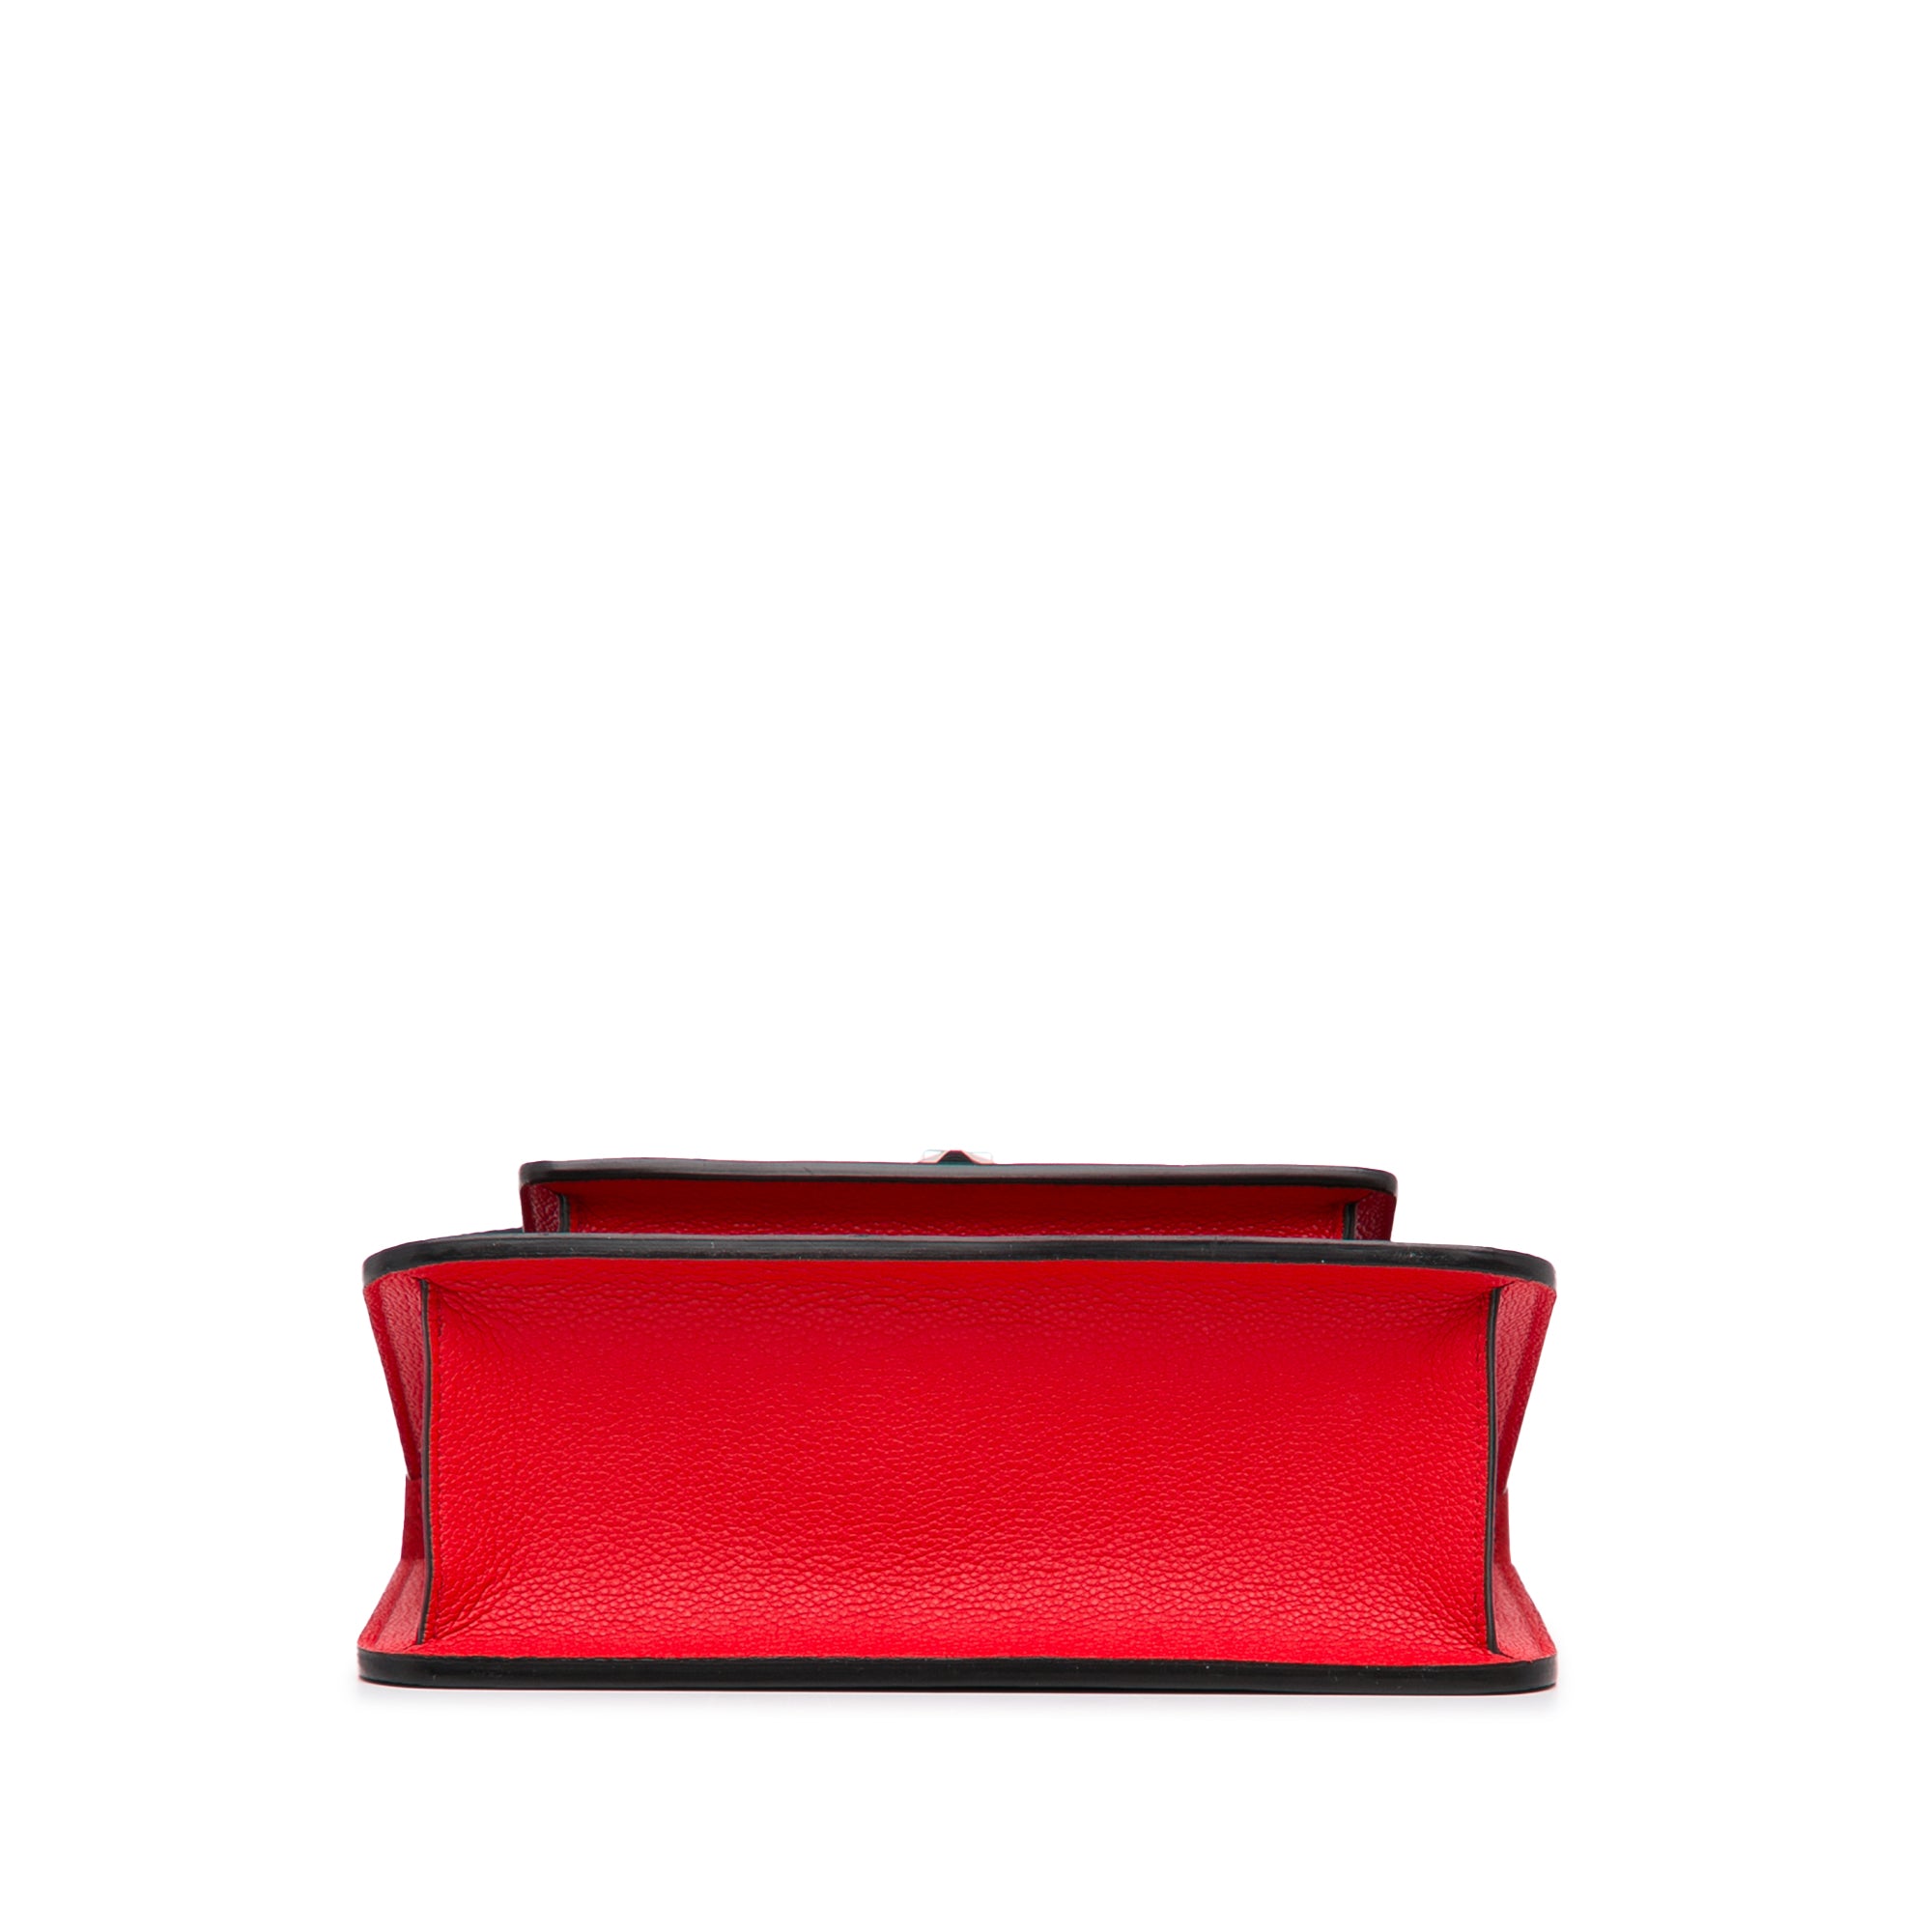 Neo monceau leather handbag Louis Vuitton Multicolour in Leather - 34288369